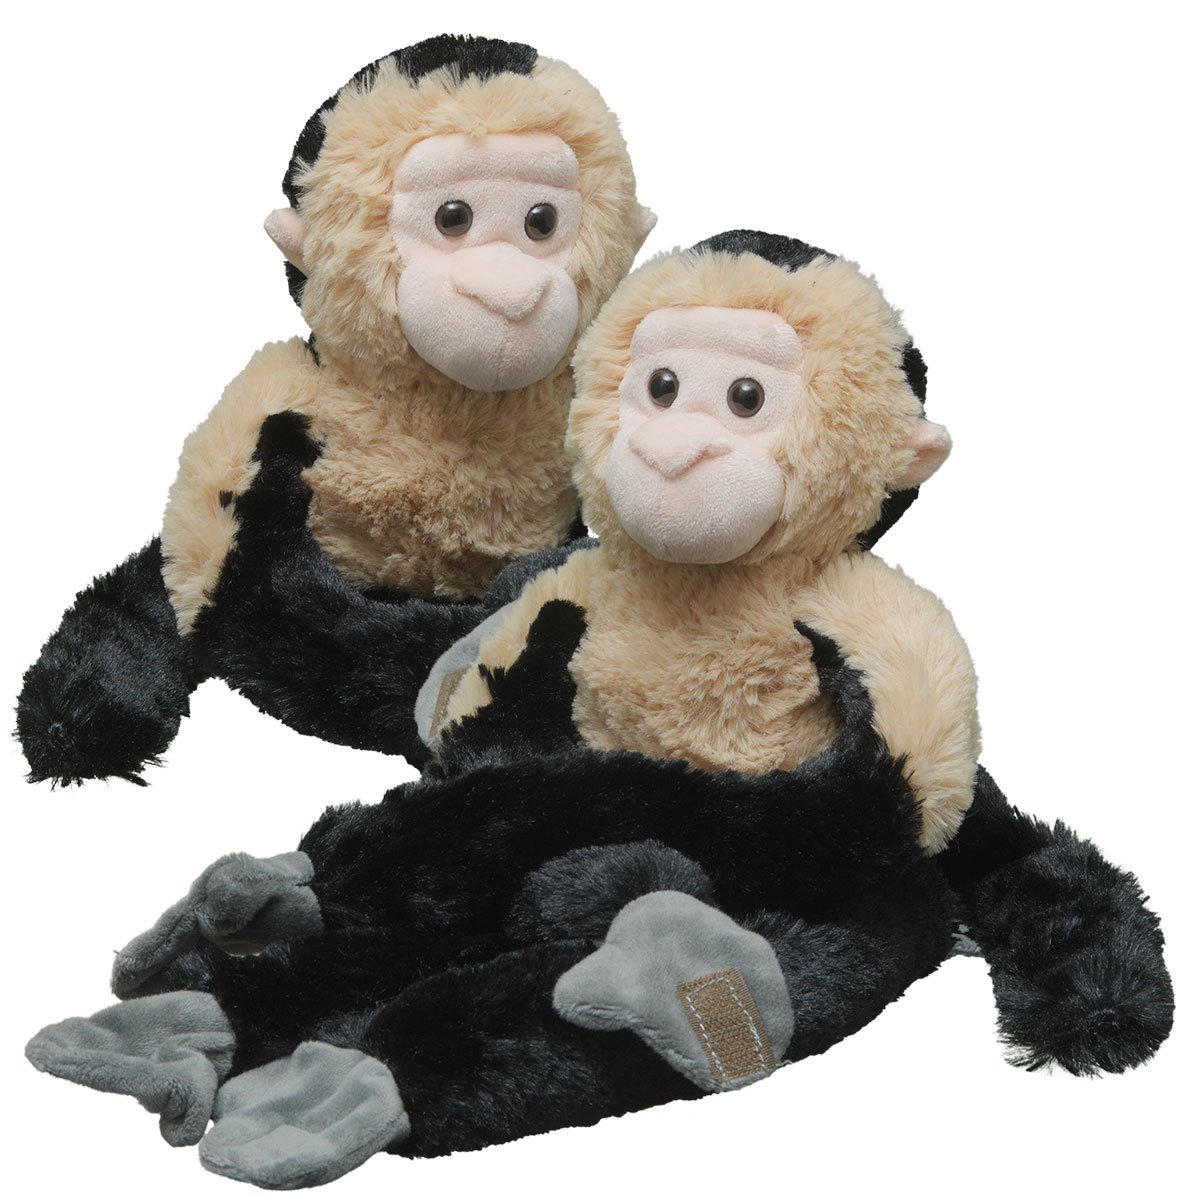 Adopt A Capuchin Monkey Symbolic Adoptions From Wwf